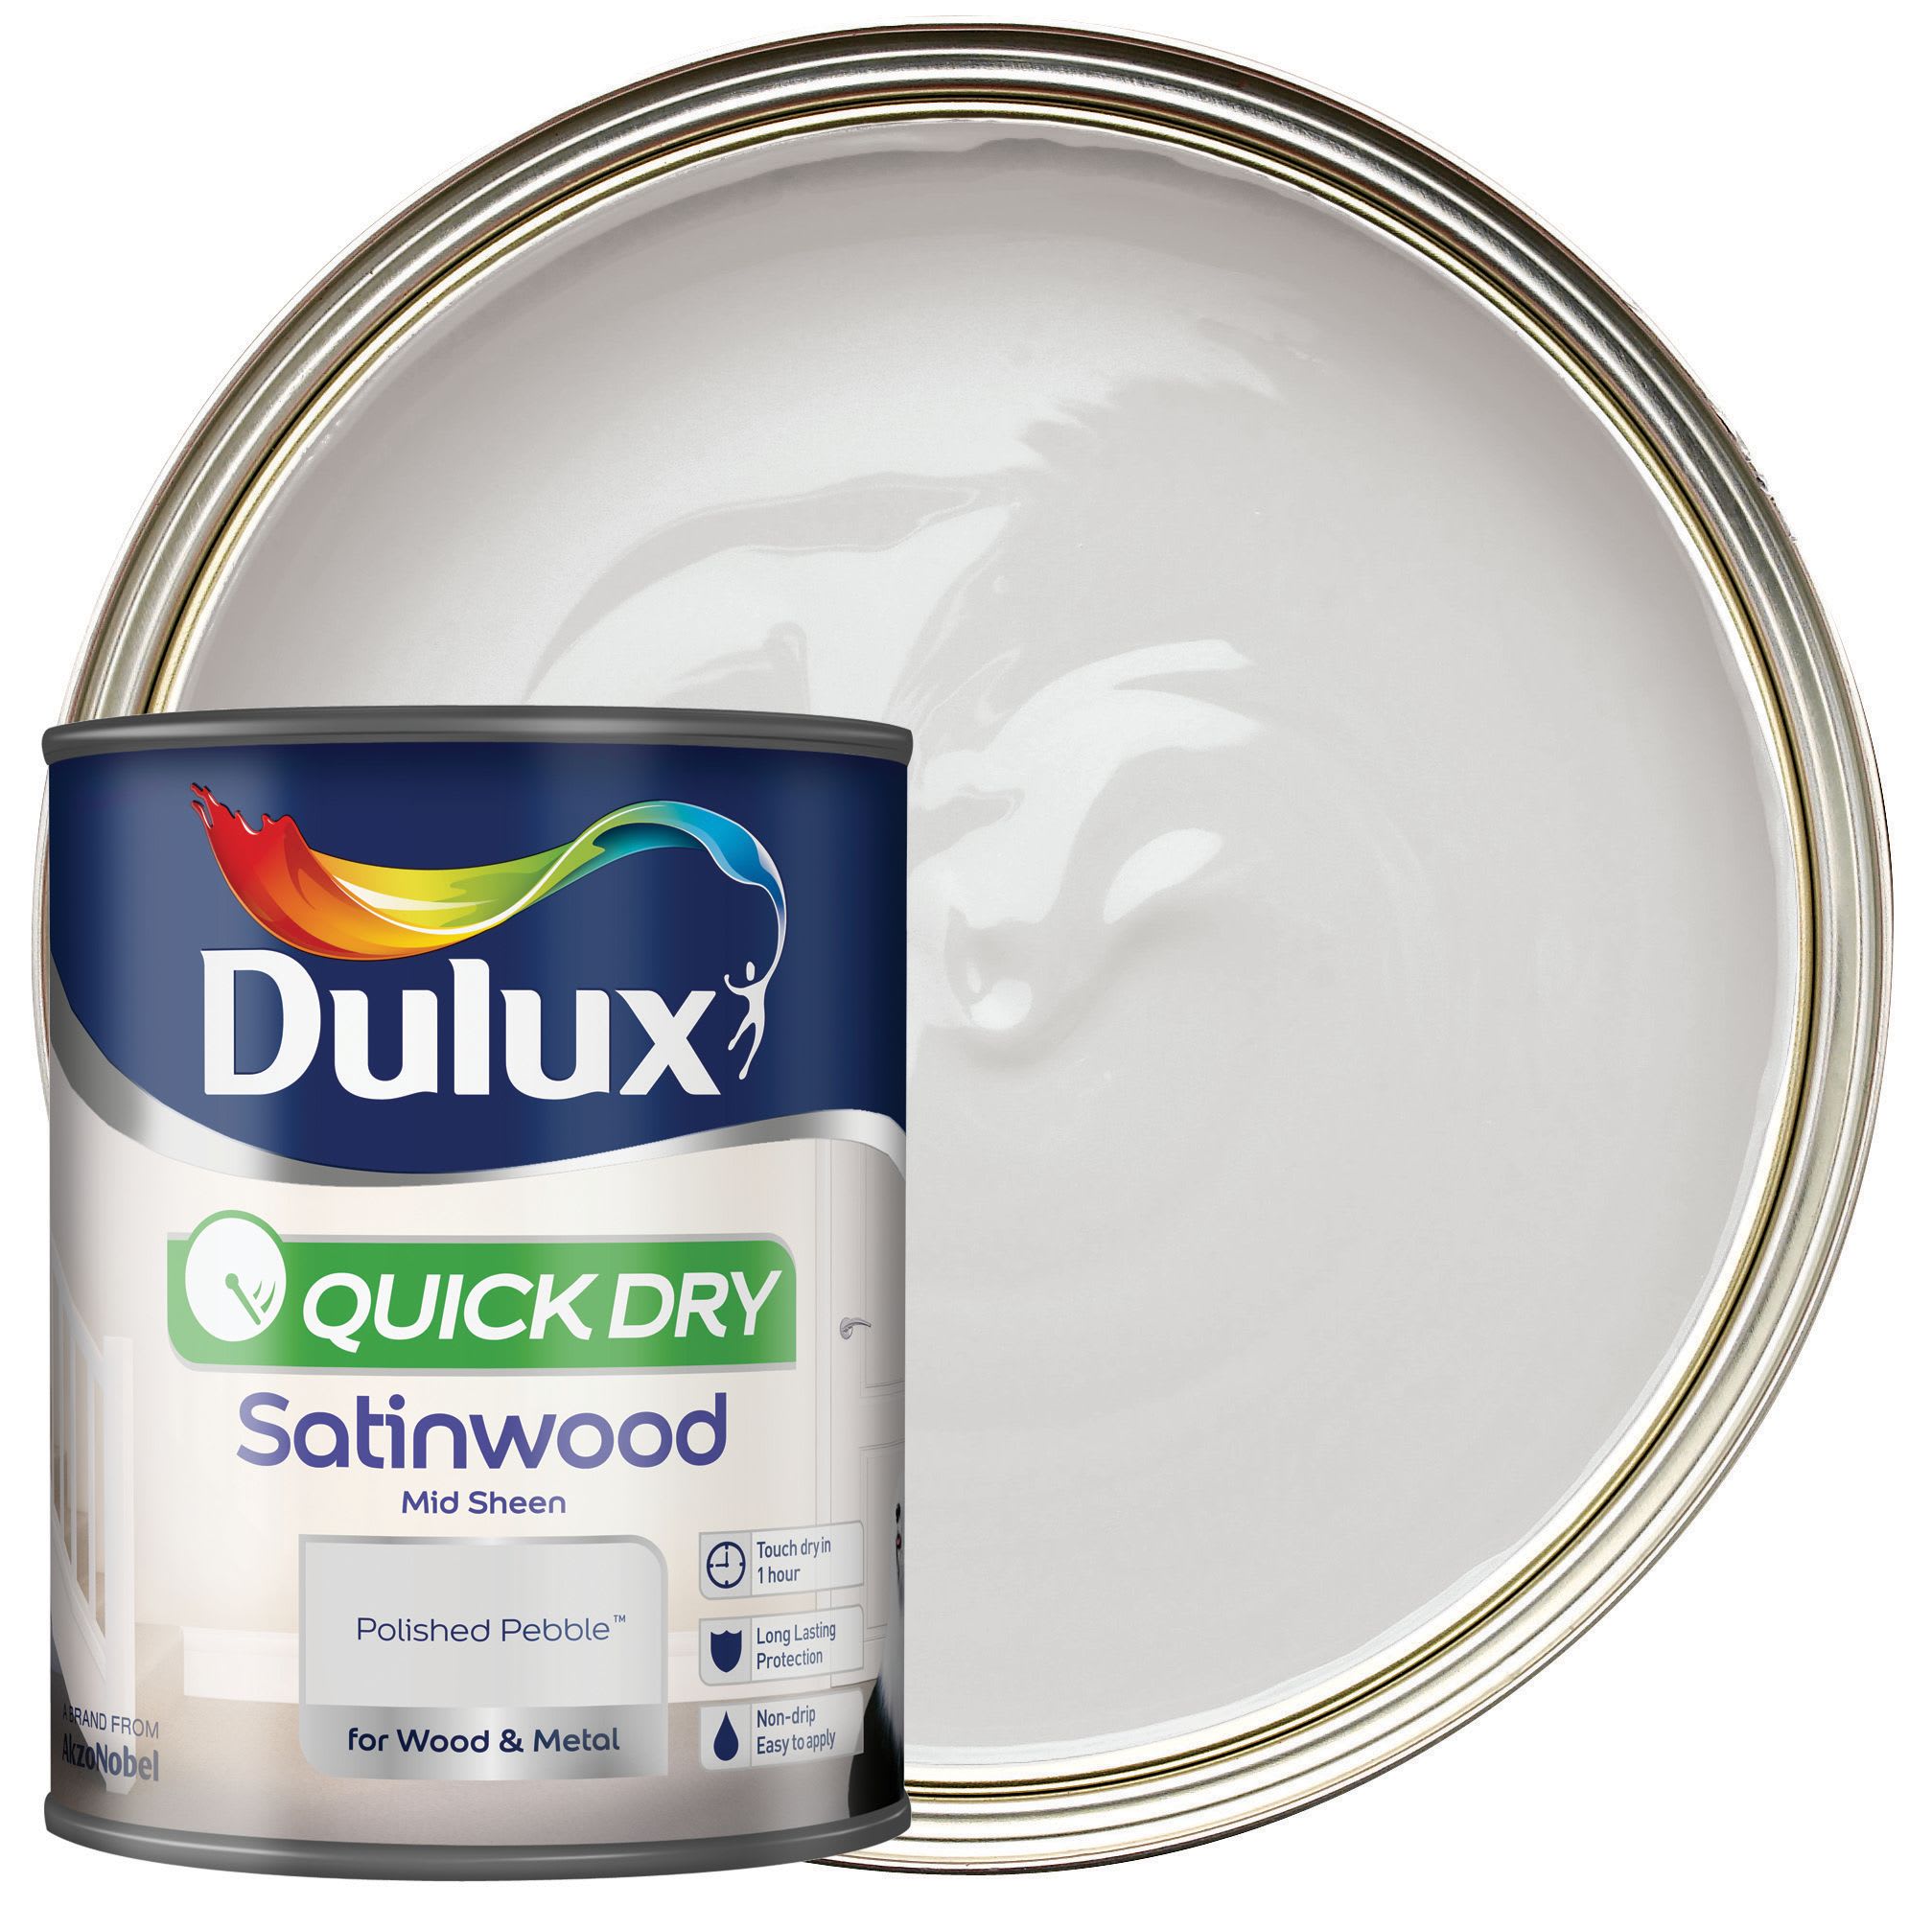 Dulux Quick Dry Satinwood Paint - Polished Pebble